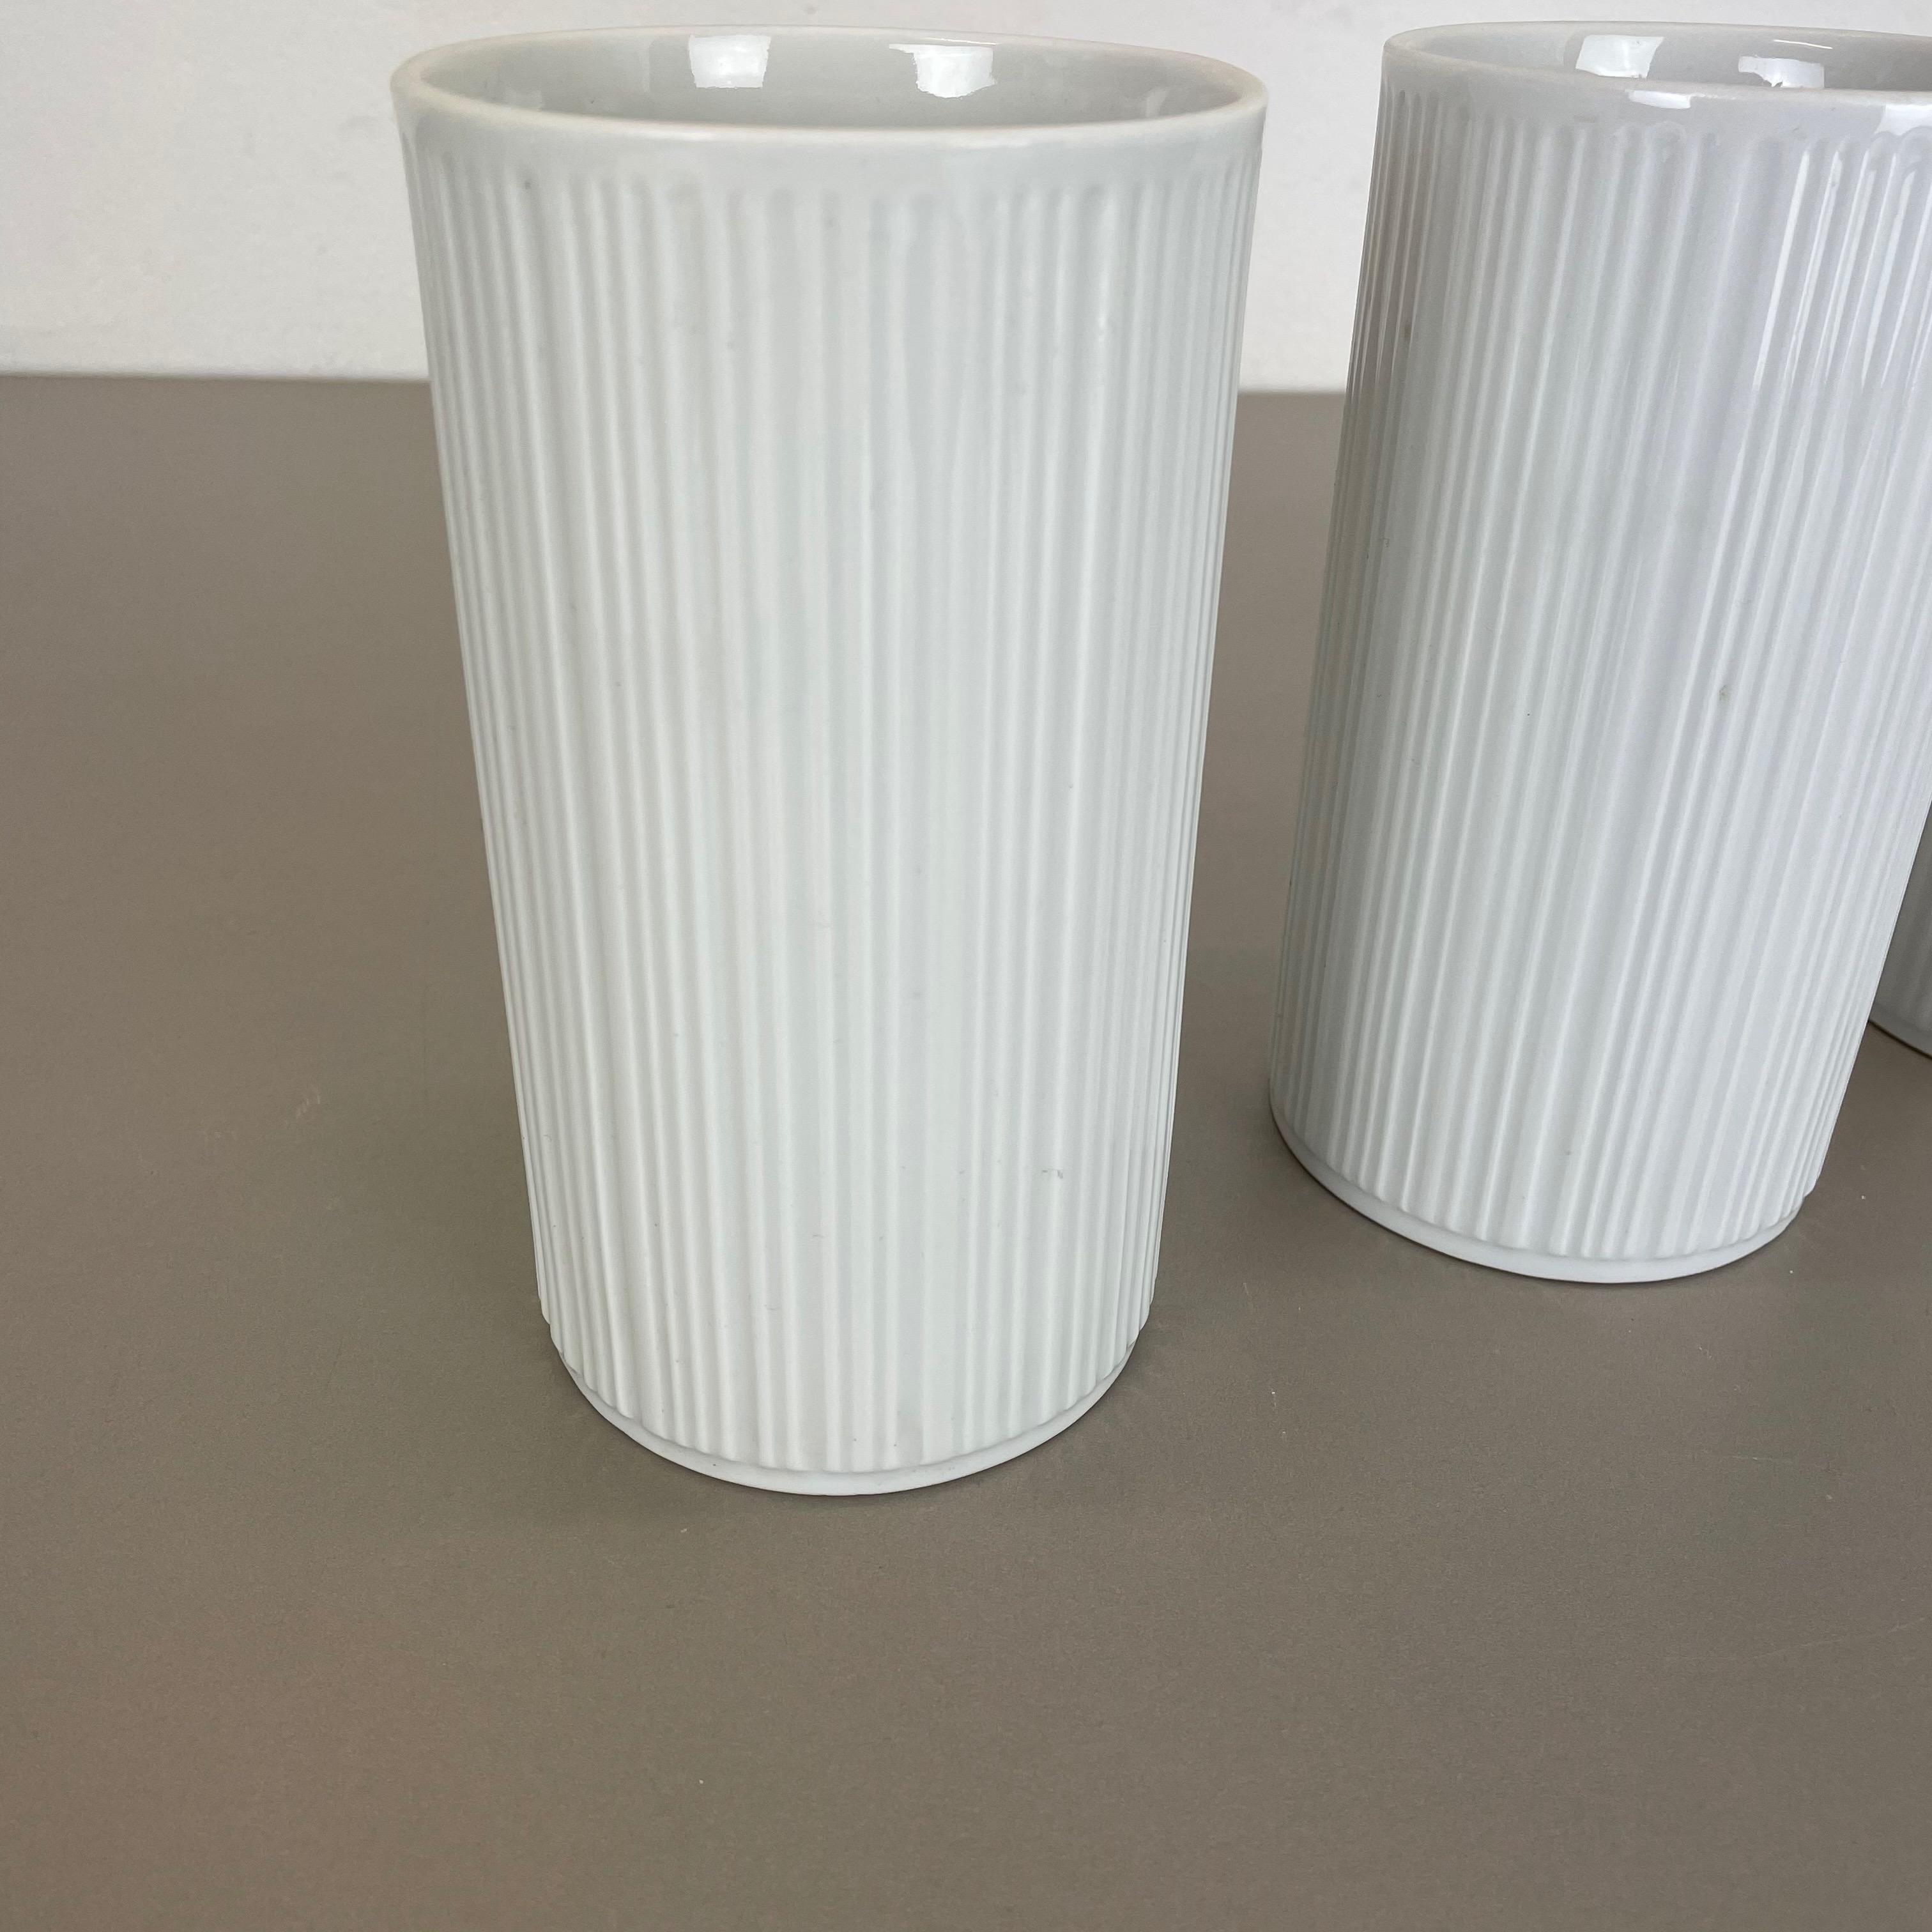 20th Century Set of 3 OP Art Porcelain Vases by Melitta Minden, Germany, 1970s For Sale